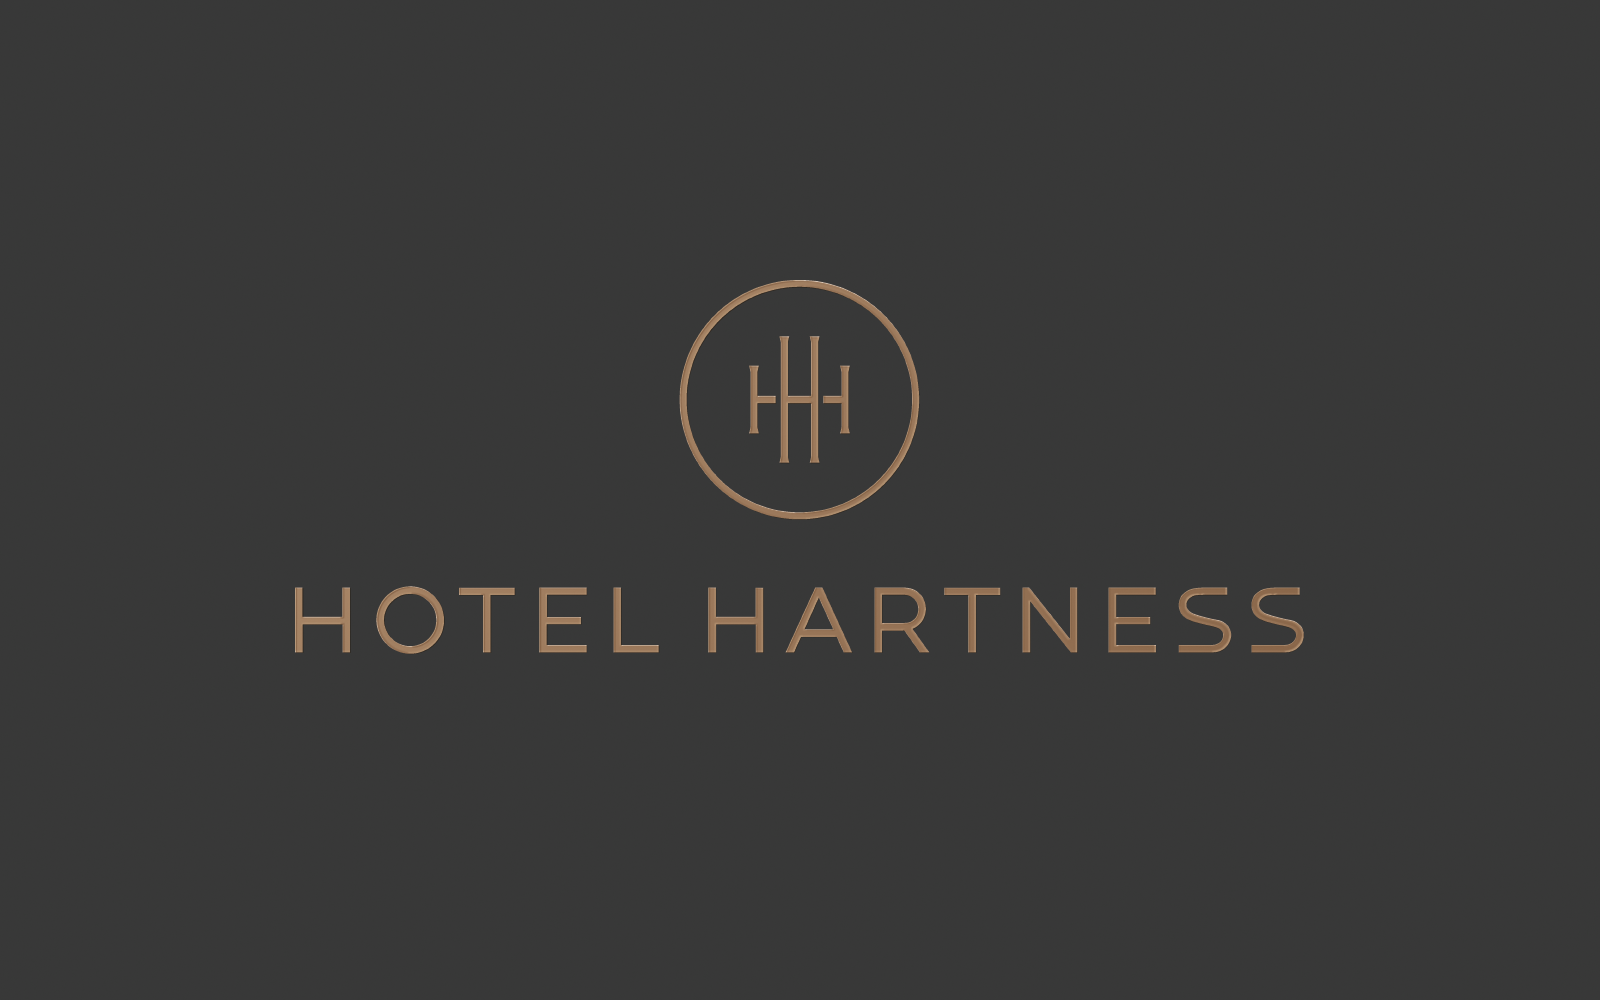 Ferreira Design Company - Hotel Hartness